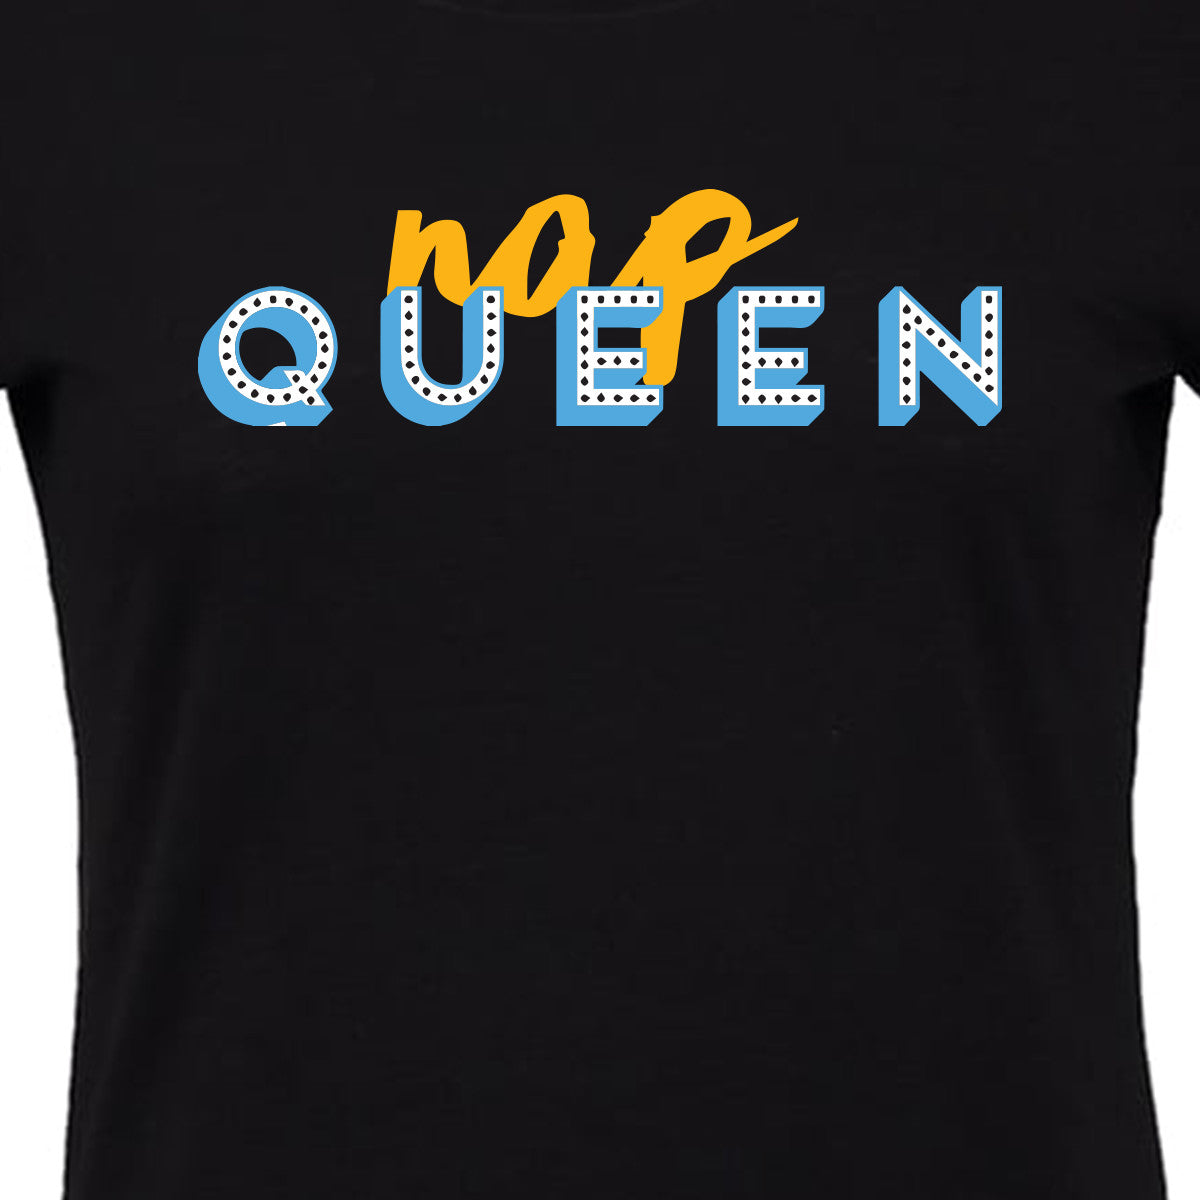 Nap Queen Black T- Shirt